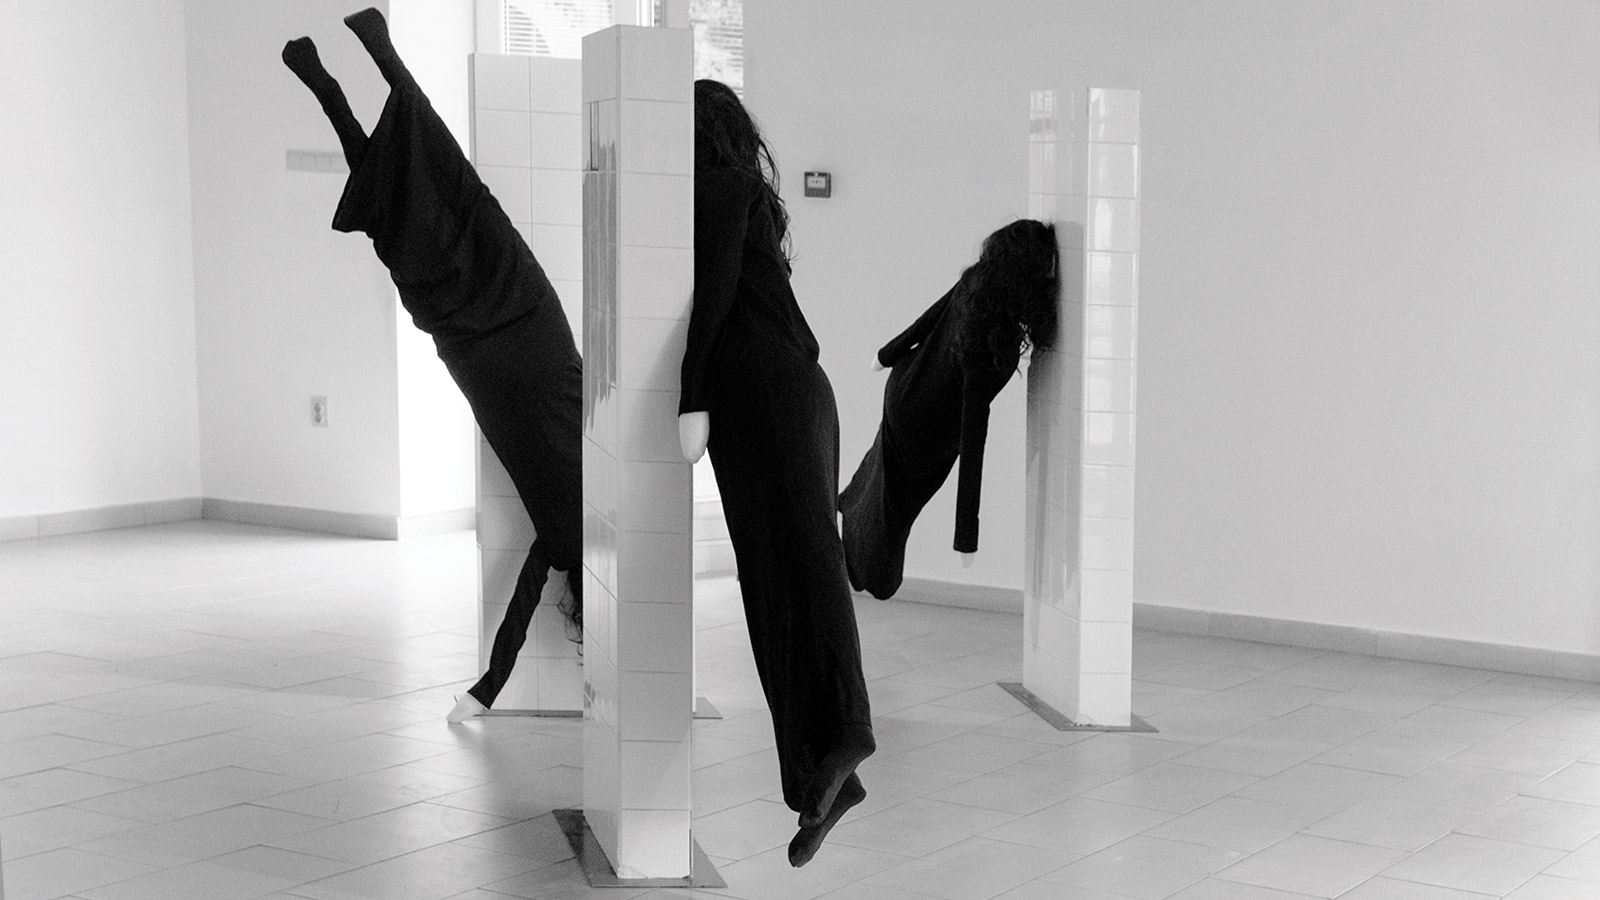 Goran Despotovski-The Gallery Of Contemporary Art, Pančevo 2017